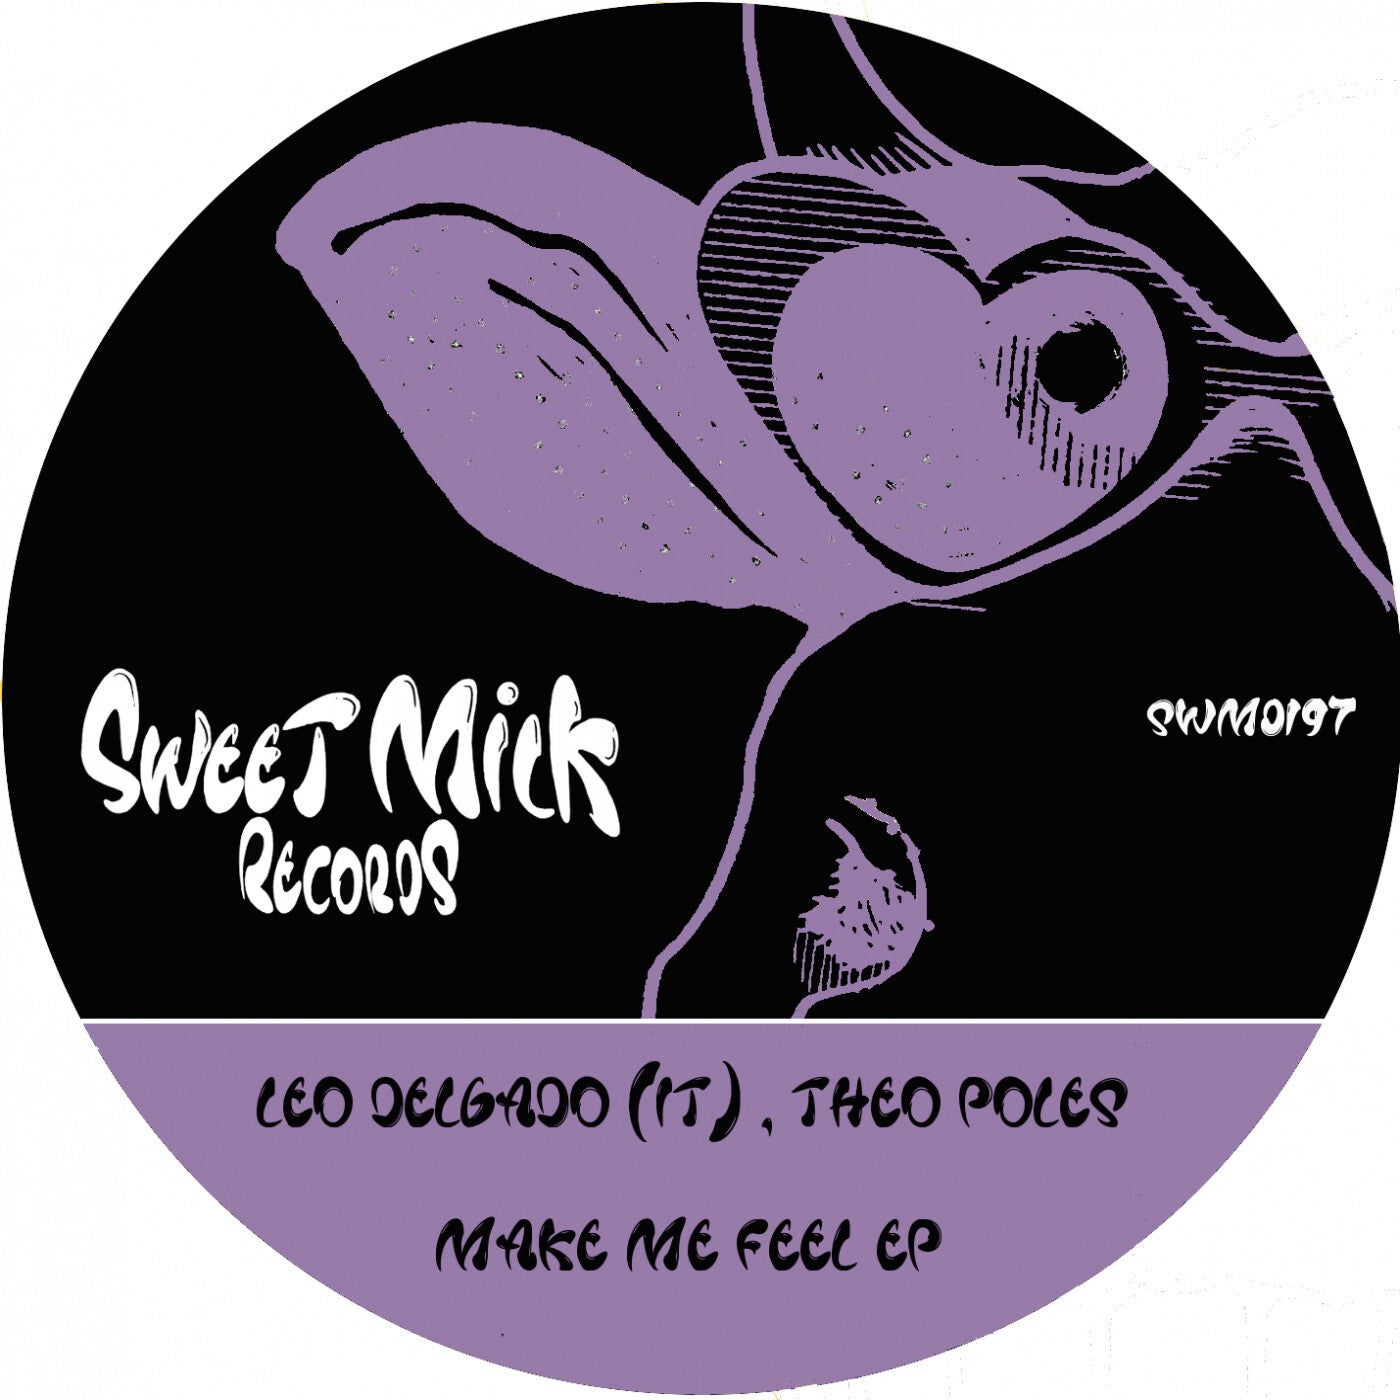 Leo Delgado (IT), Theo Poles - Make Me Feel EP [SWM0197]